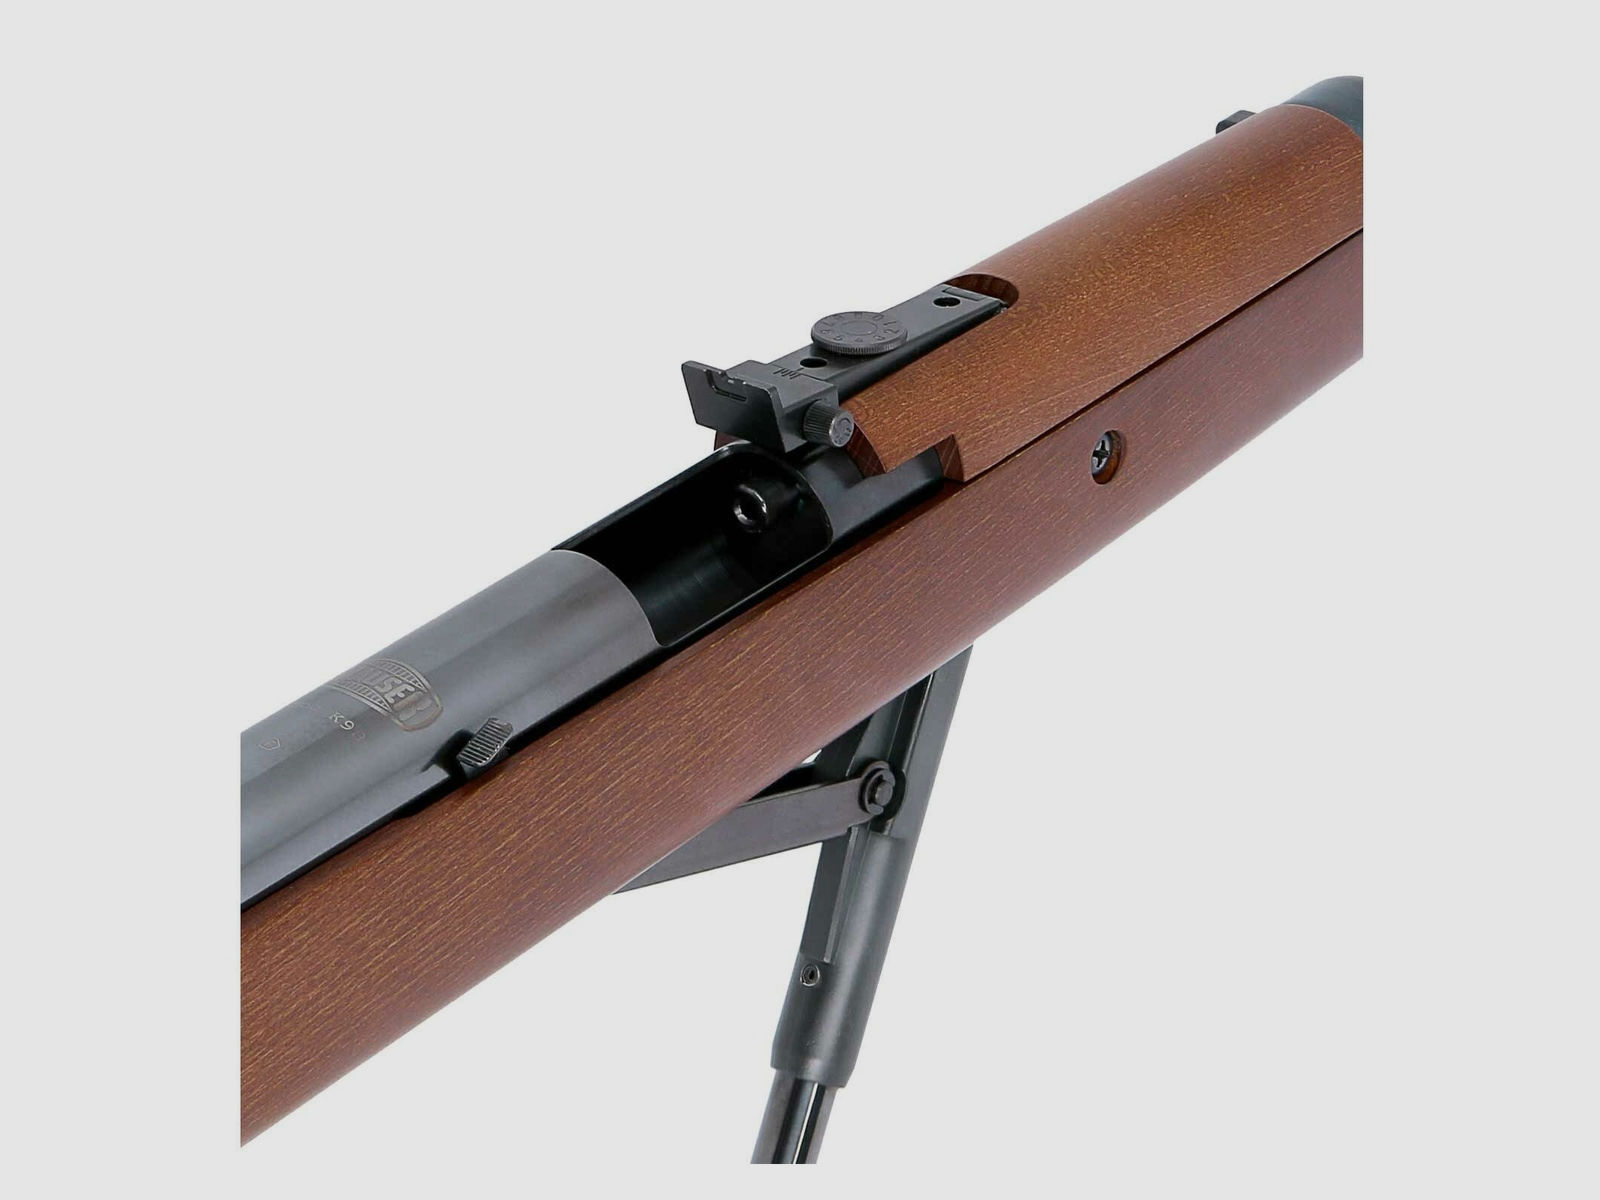 SET Mauser K98 Starrlauf Unterhebelspanner Luftgewehr Kaliber 4,5 mm Diabolo (P18) + 1000 Diabolos + 100 Scheiben + Kugelfang